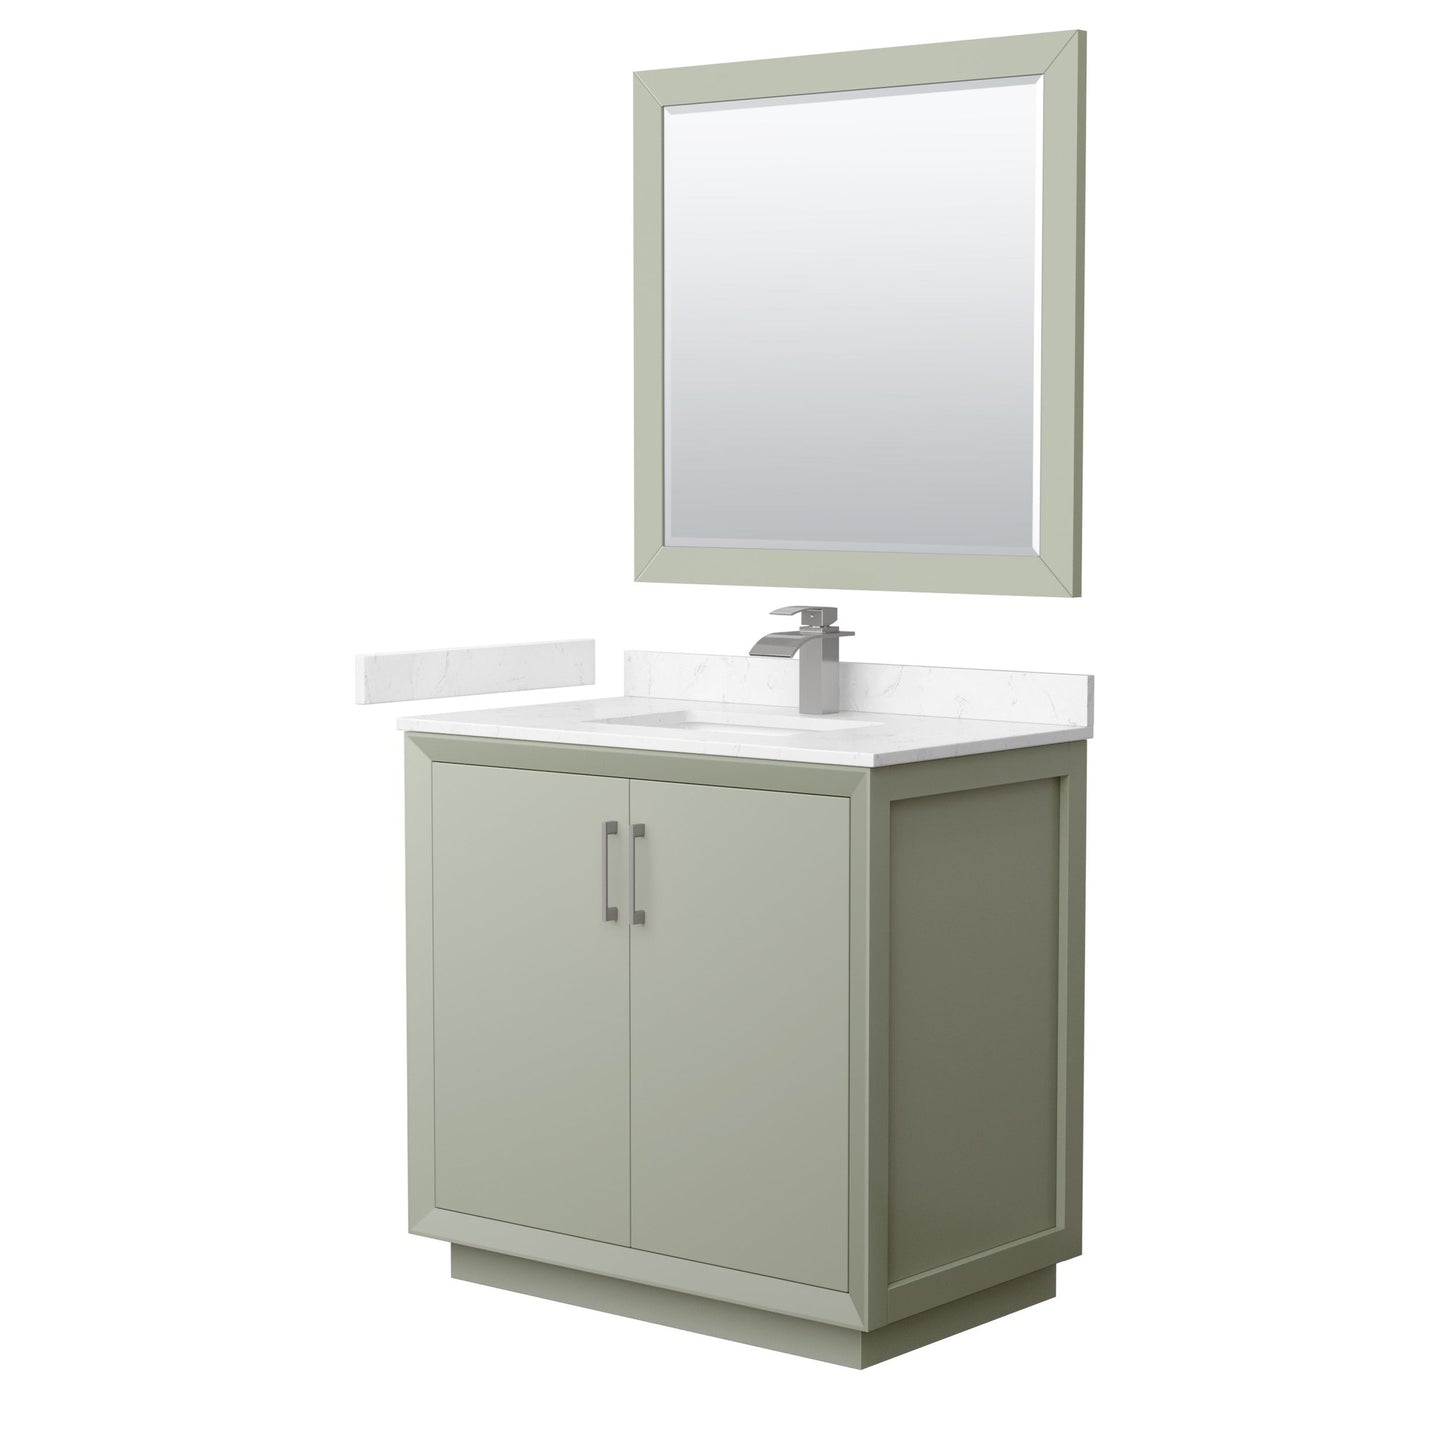 Wyndham Collection Strada 36" Single Bathroom Vanity in Light Green, Carrara Cultured Marble Countertop, Undermount Square Sink, Brushed Nickel Trim, 34" Mirror